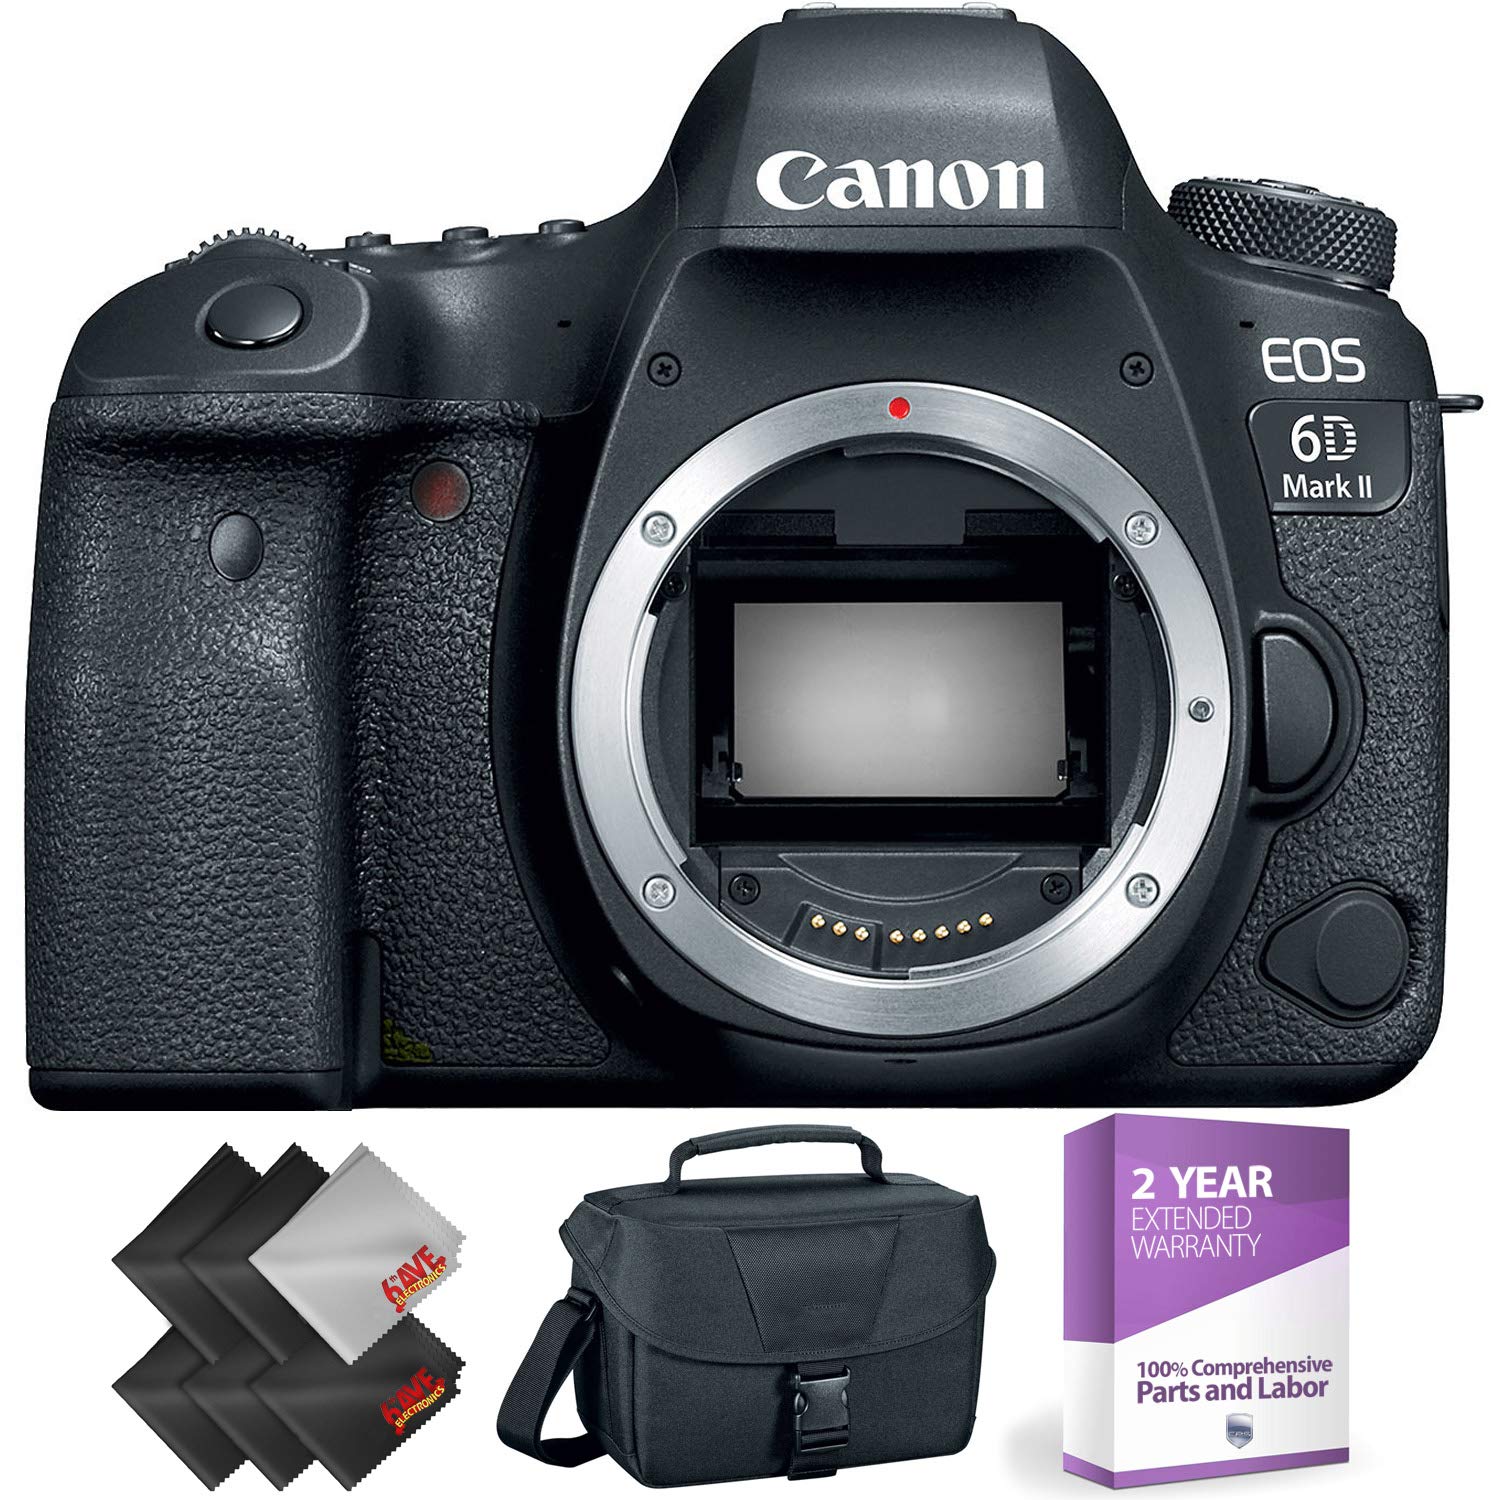 Canon EOS 6D Mark II DSLR Camera (Body Only) + 1 Year Warranty Base Bundle